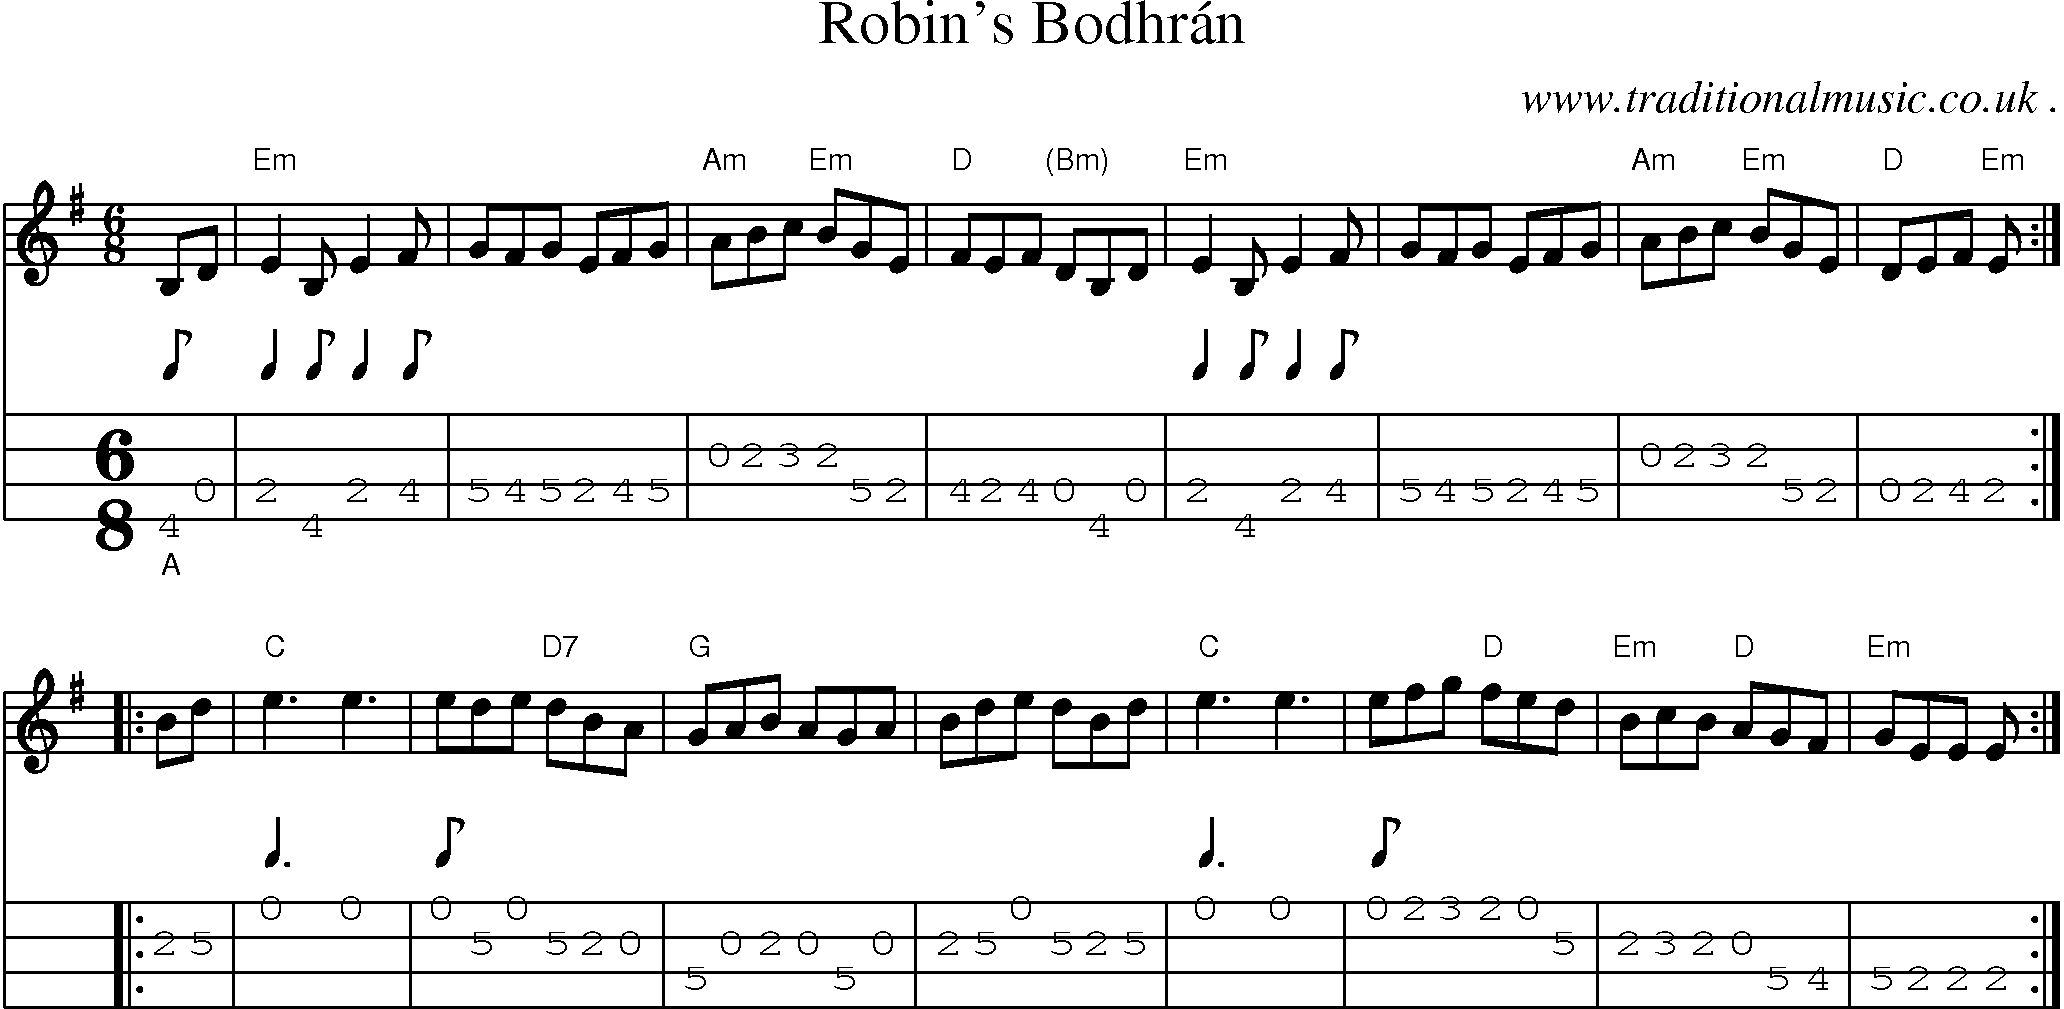 Sheet-music  score, Chords and Mandolin Tabs for Robins Bodhran